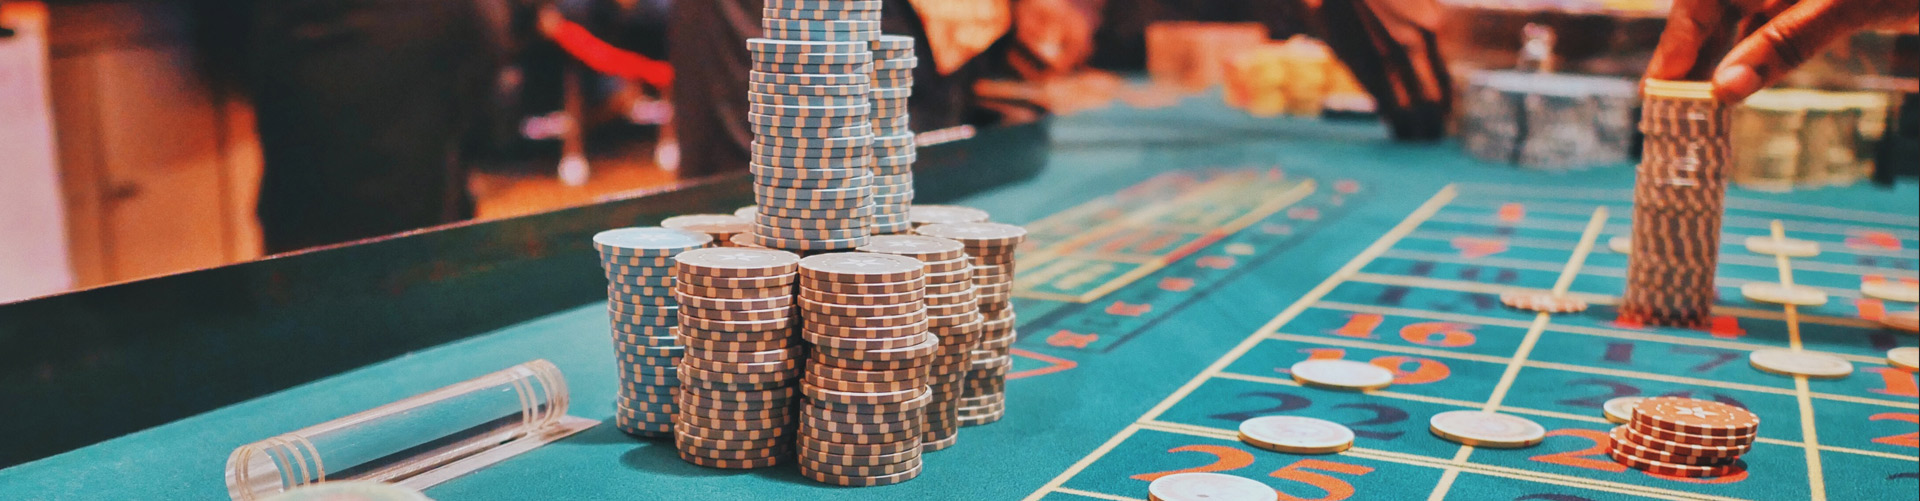 4 Most Common Problems With казино